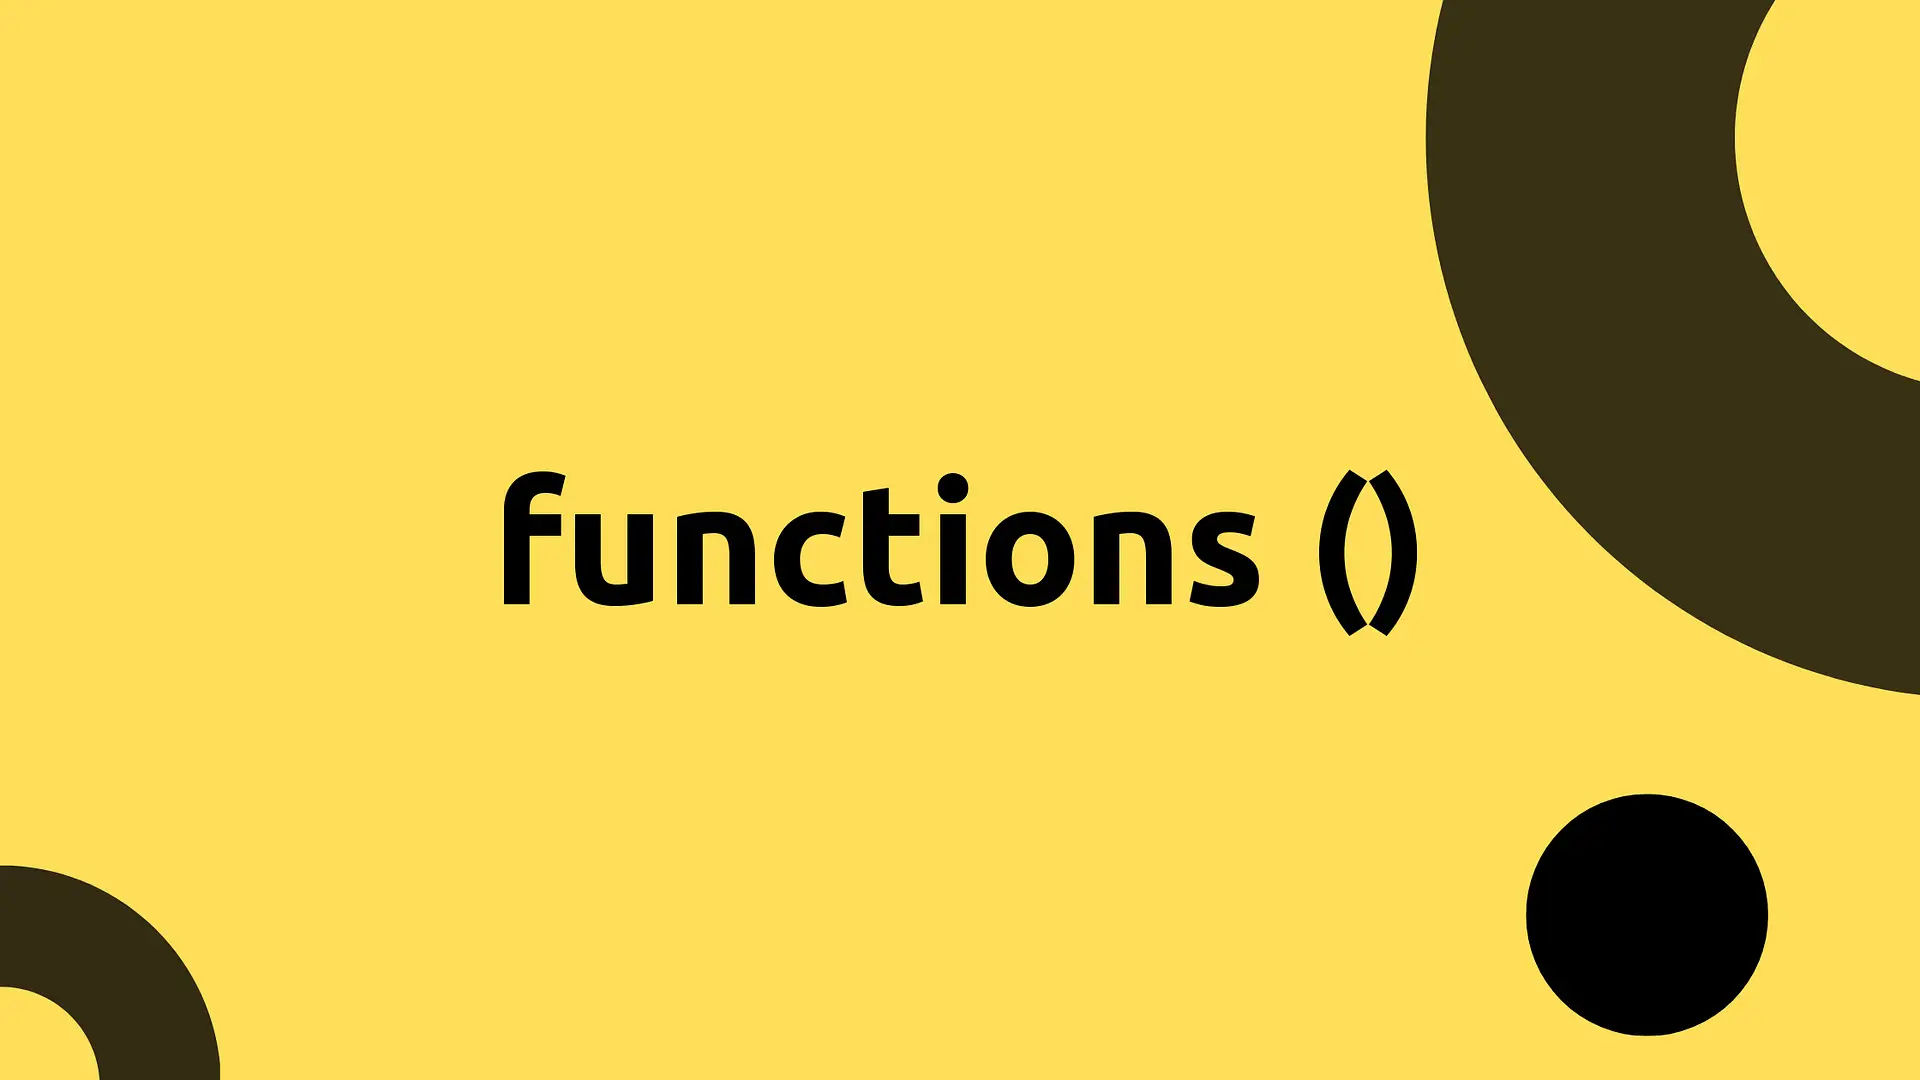 Anophel-آنوفل زمان استفاده از یک عبارت تابع در مقابل تابع اعلانی